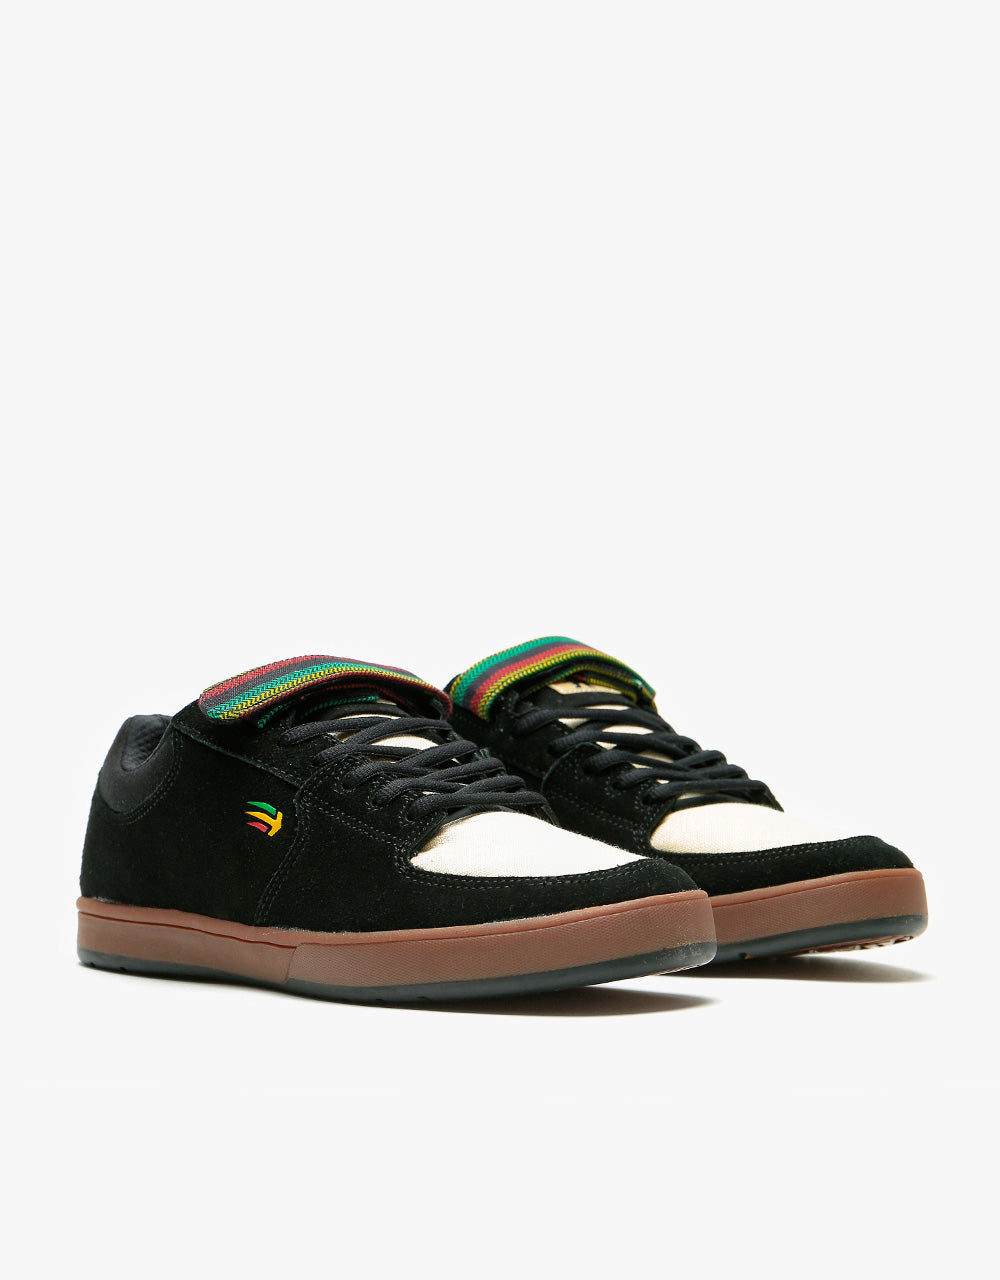 Etnies x Grizzly x Michelin Joslin 2 Skate Shoes - Black/Gum